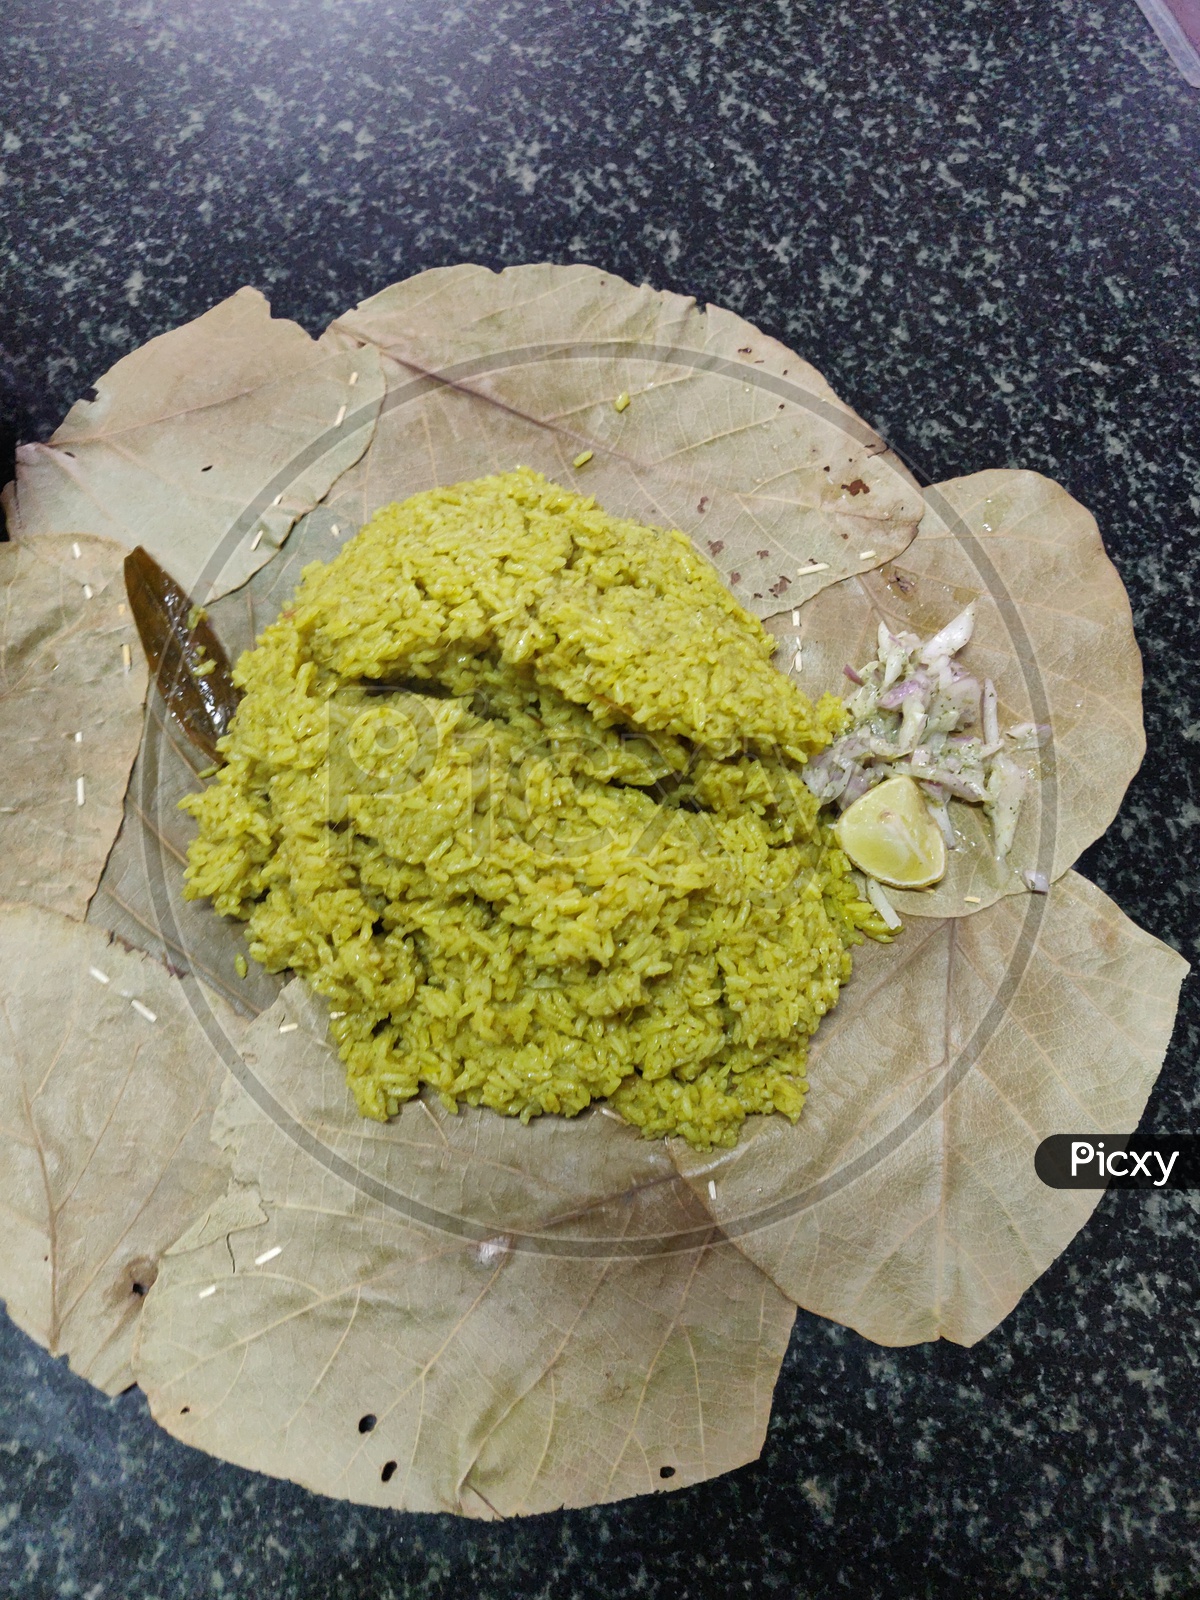 Karnataka Sytle Donne Briyani Served in Traditional Leaf At Vidyarthi Bhavan